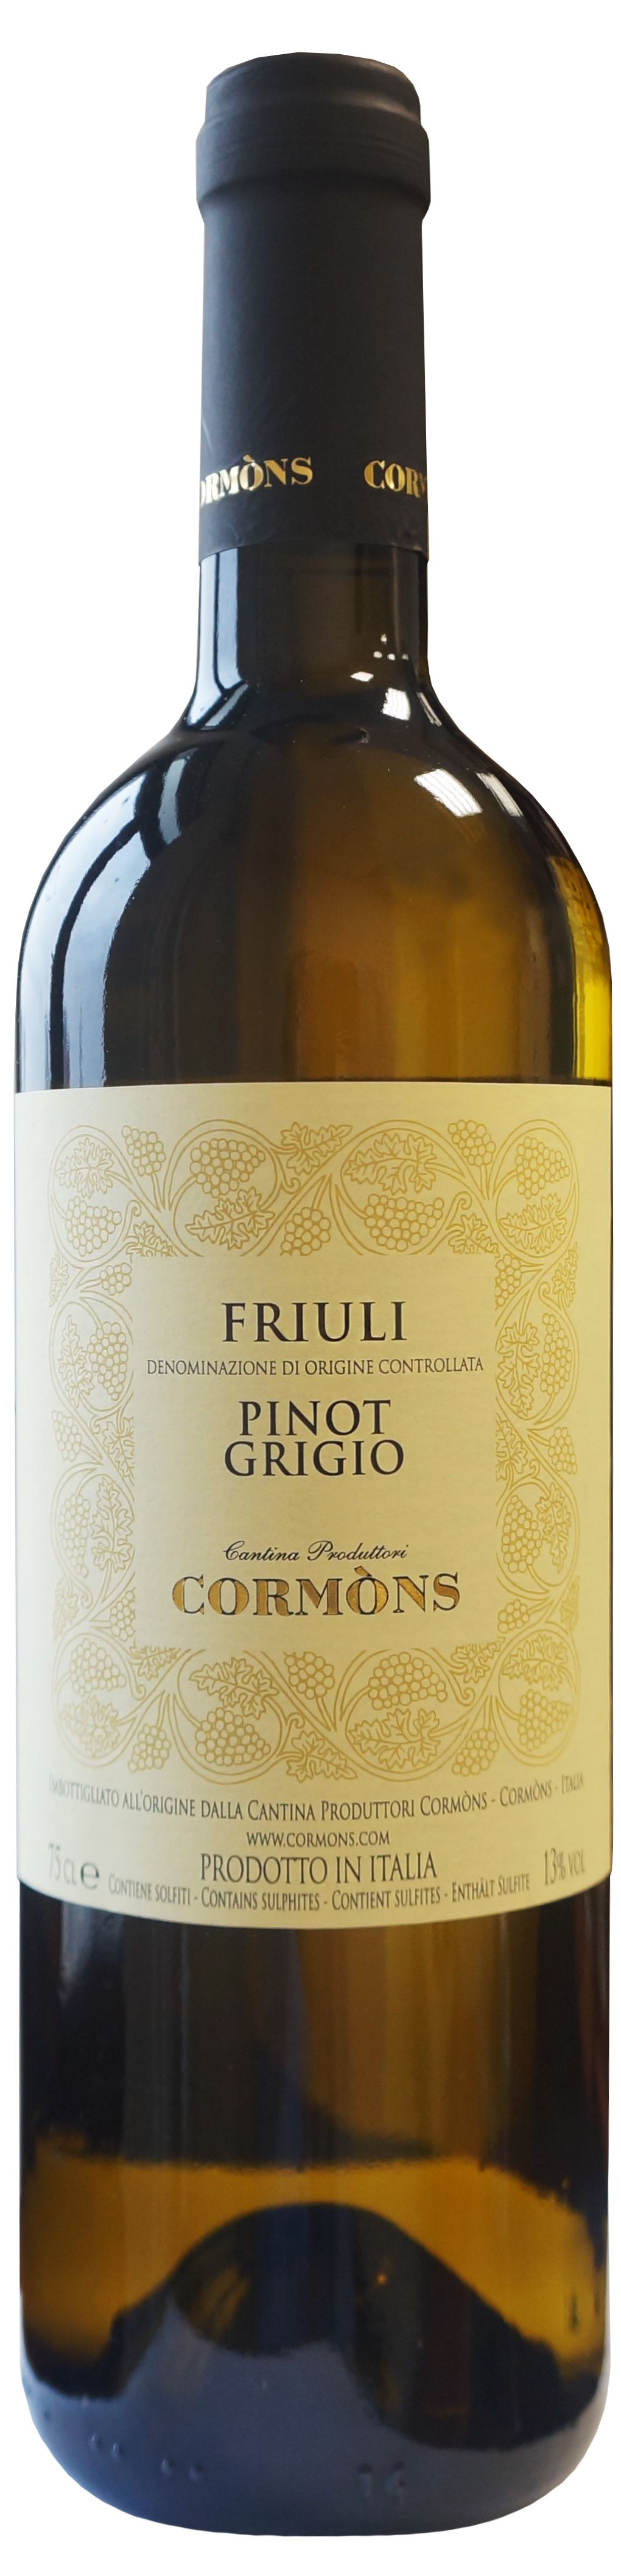 Cormons, Pinot Grigio, 2013